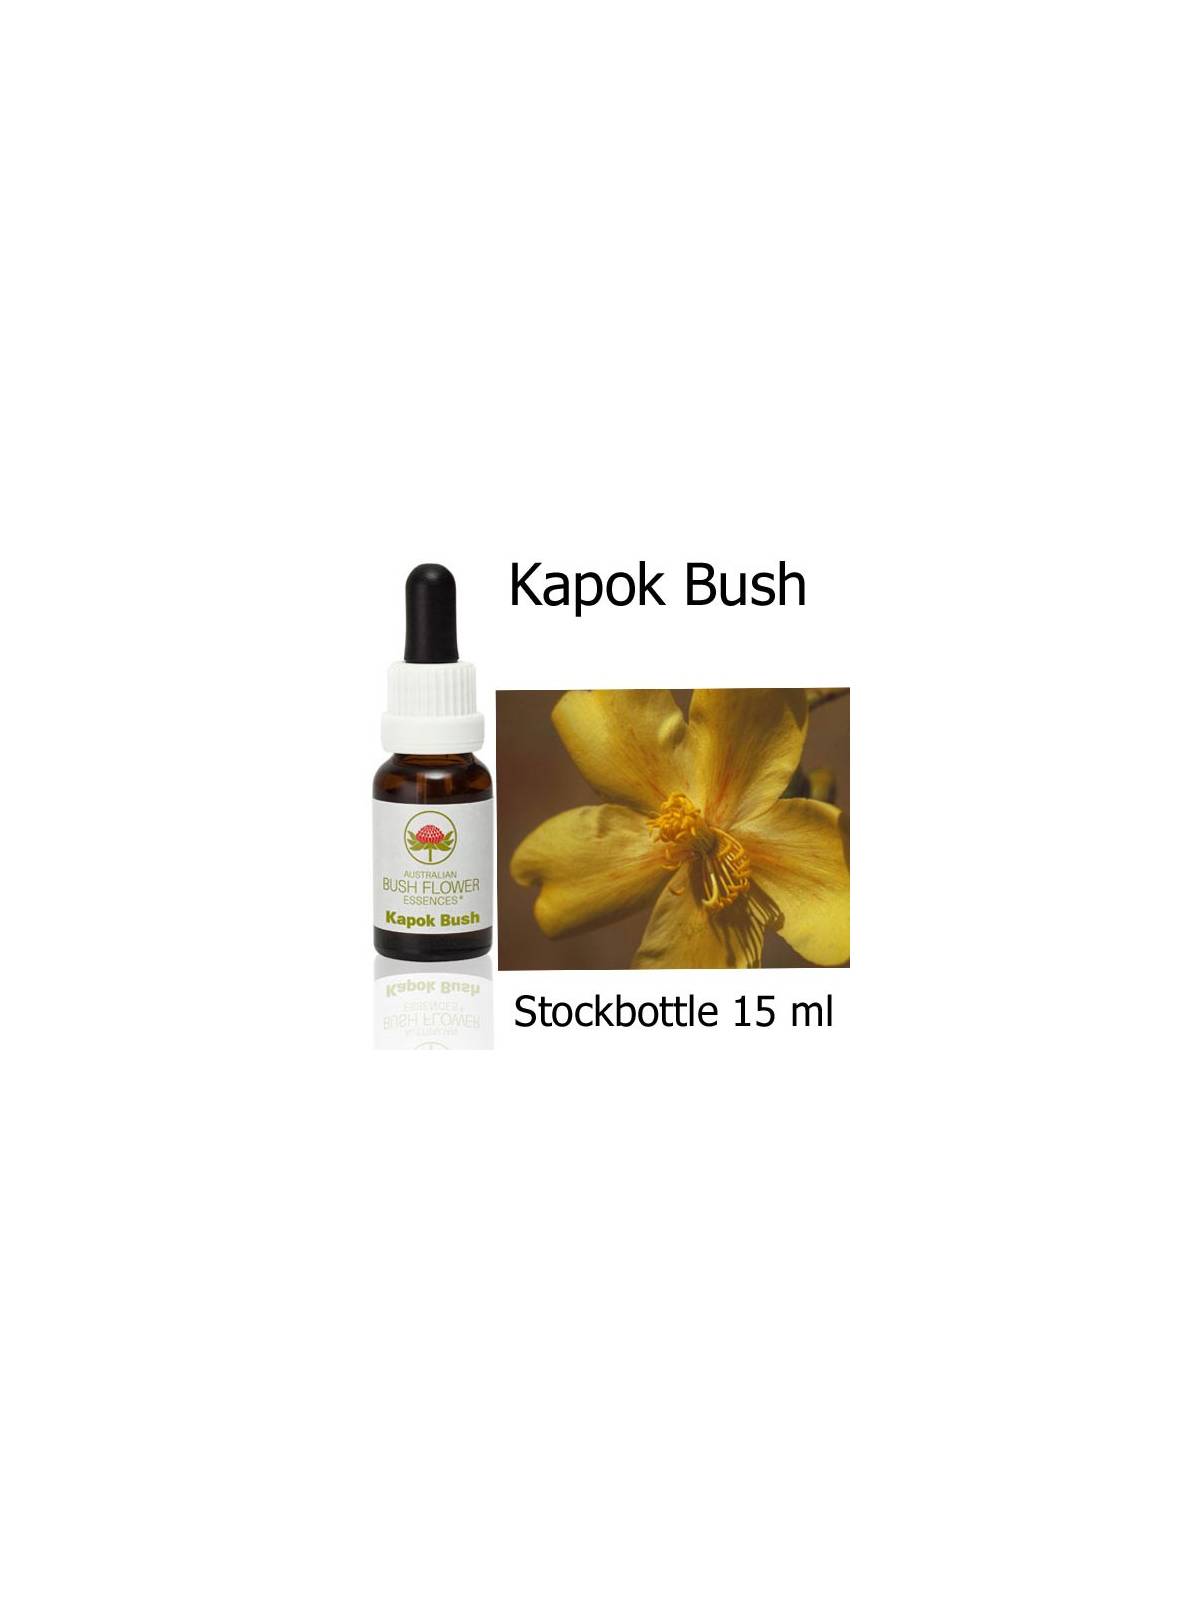 Kapok Bush Australian Bush Flower Essences stockbottles